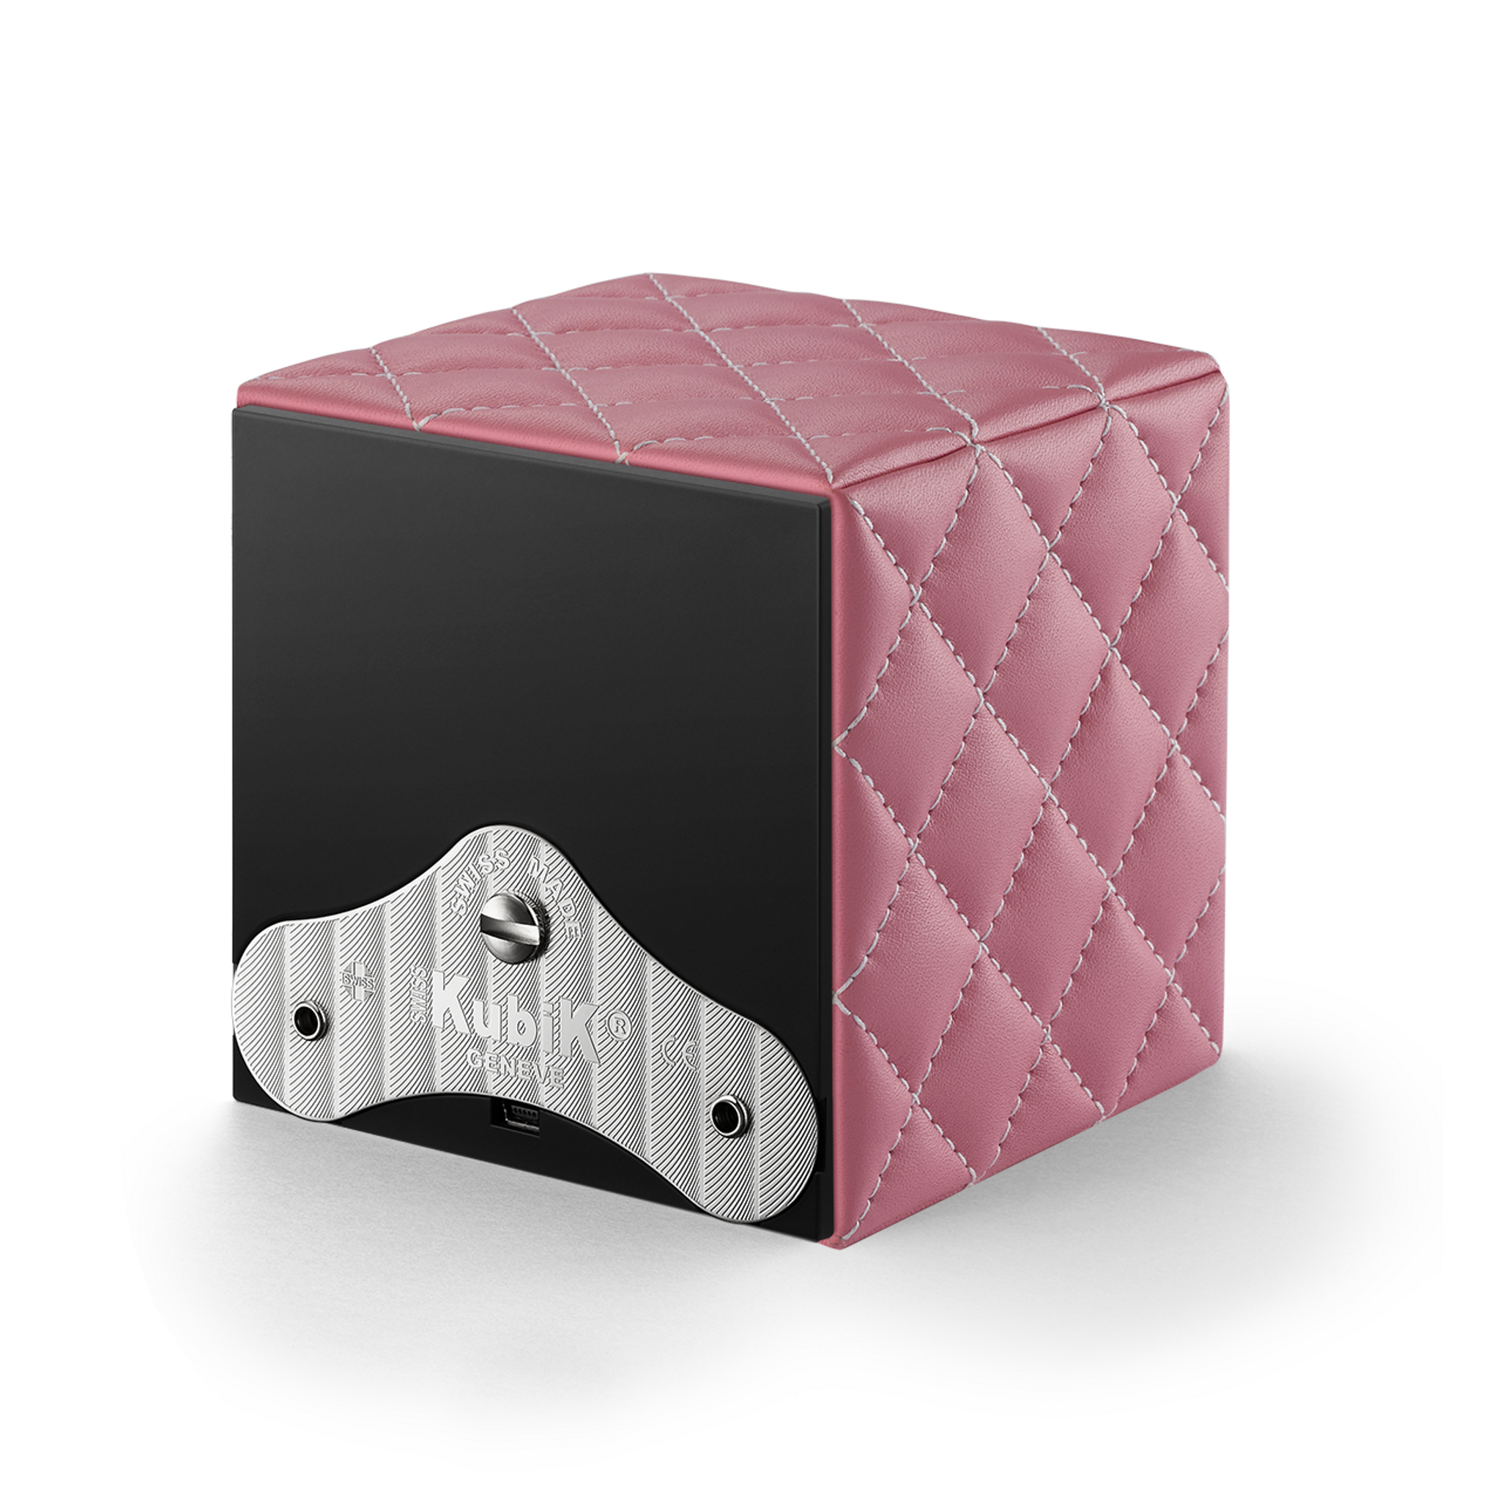 Swiss Kubik Masterbox Couture Pink with White Stitching